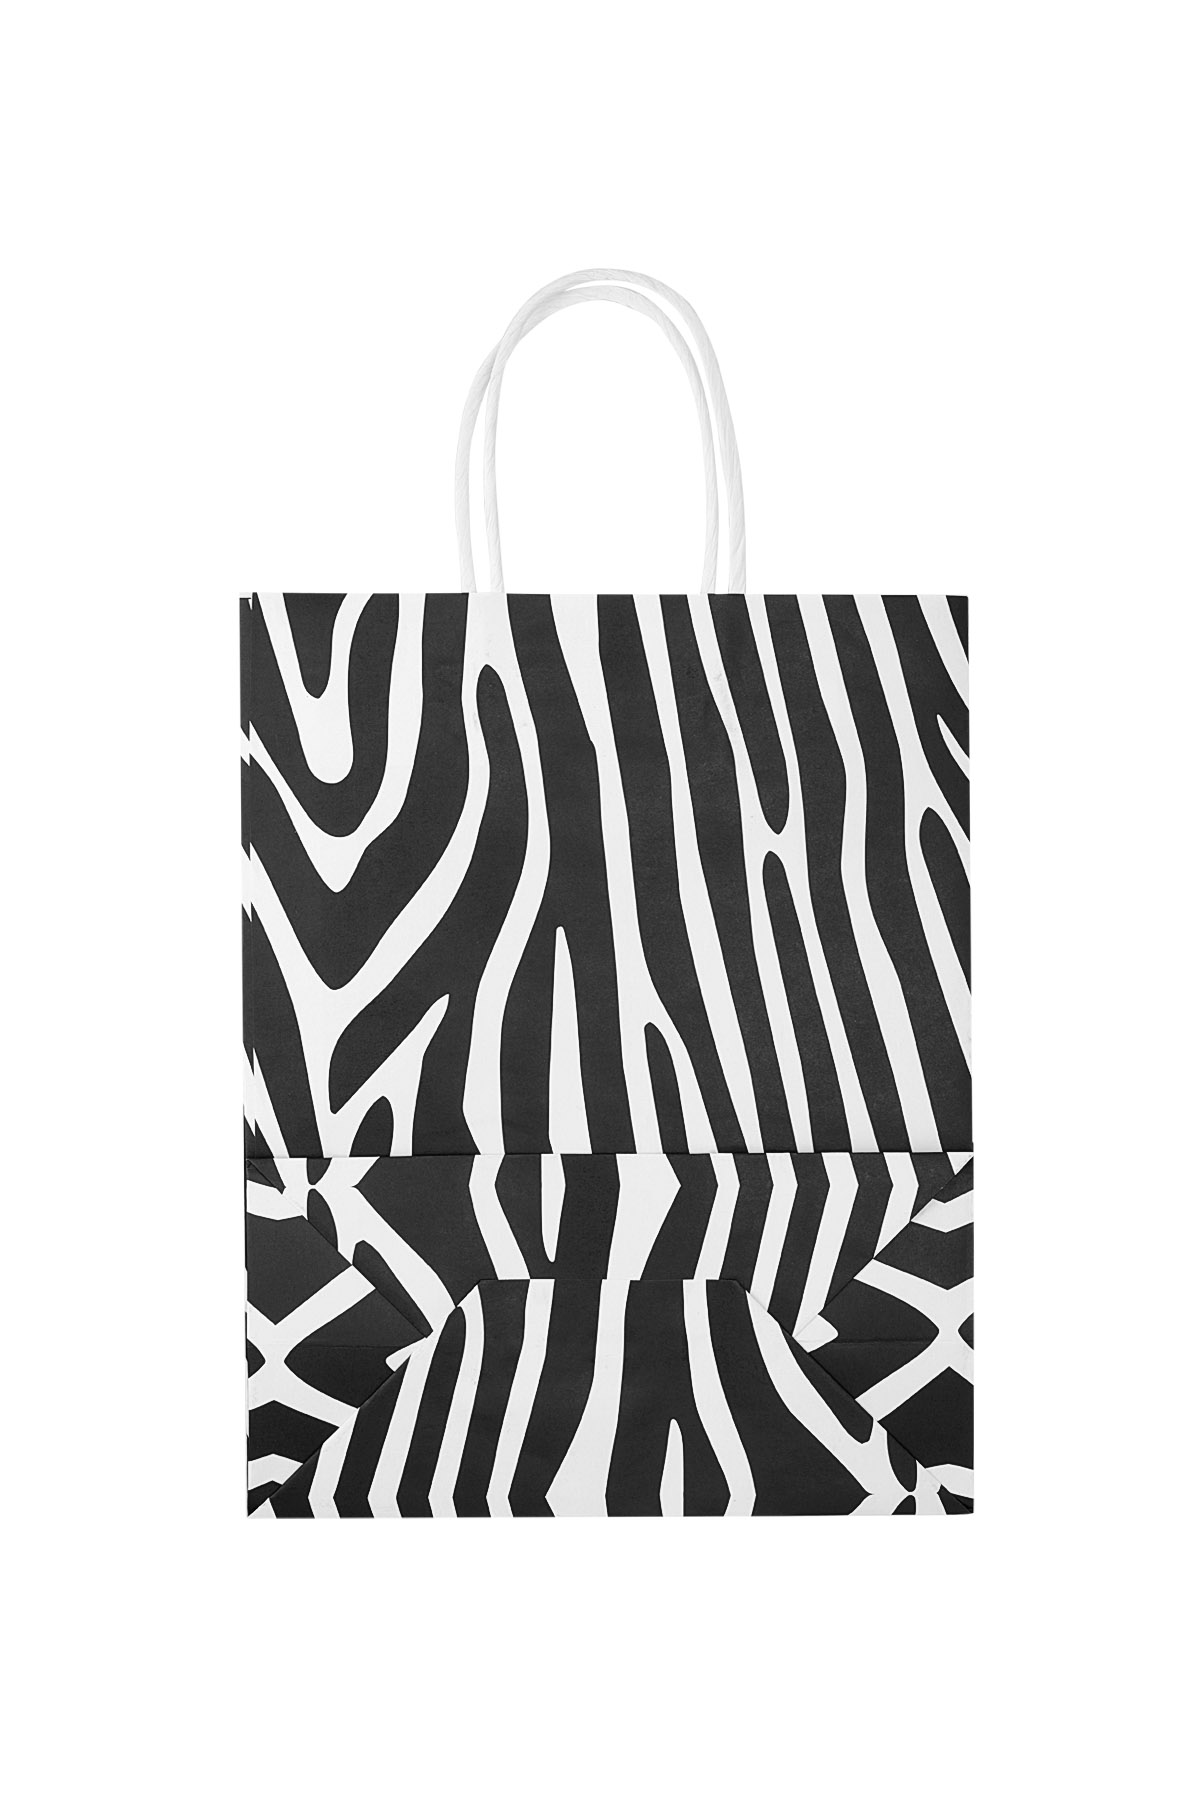 Bags zebra 50 pieces - black/white Paper Picture2